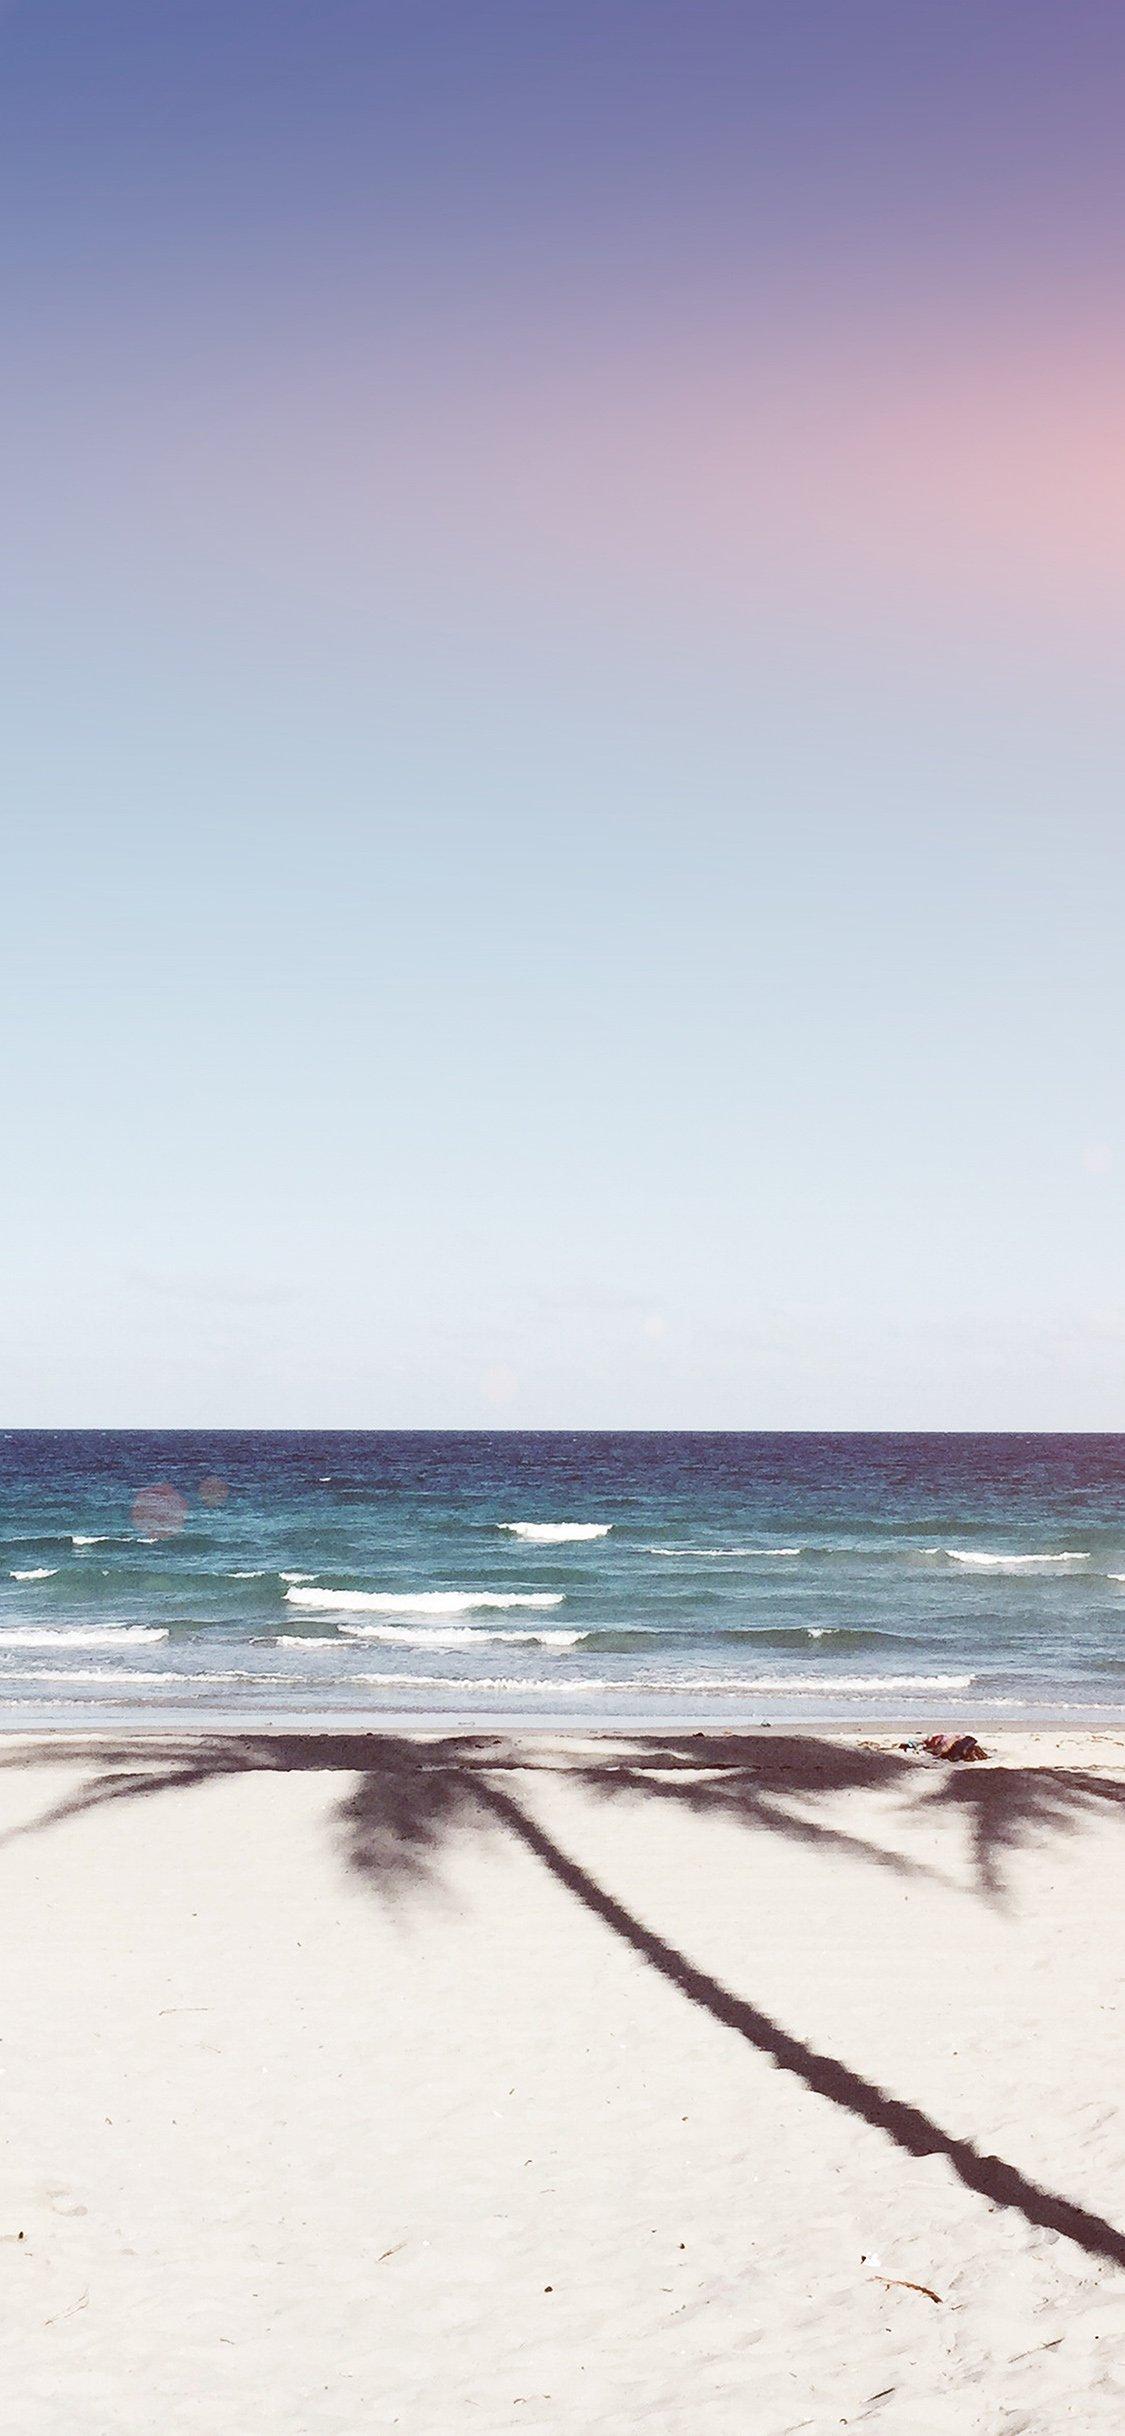 iPhone X wallpaper. beach blue nature sea